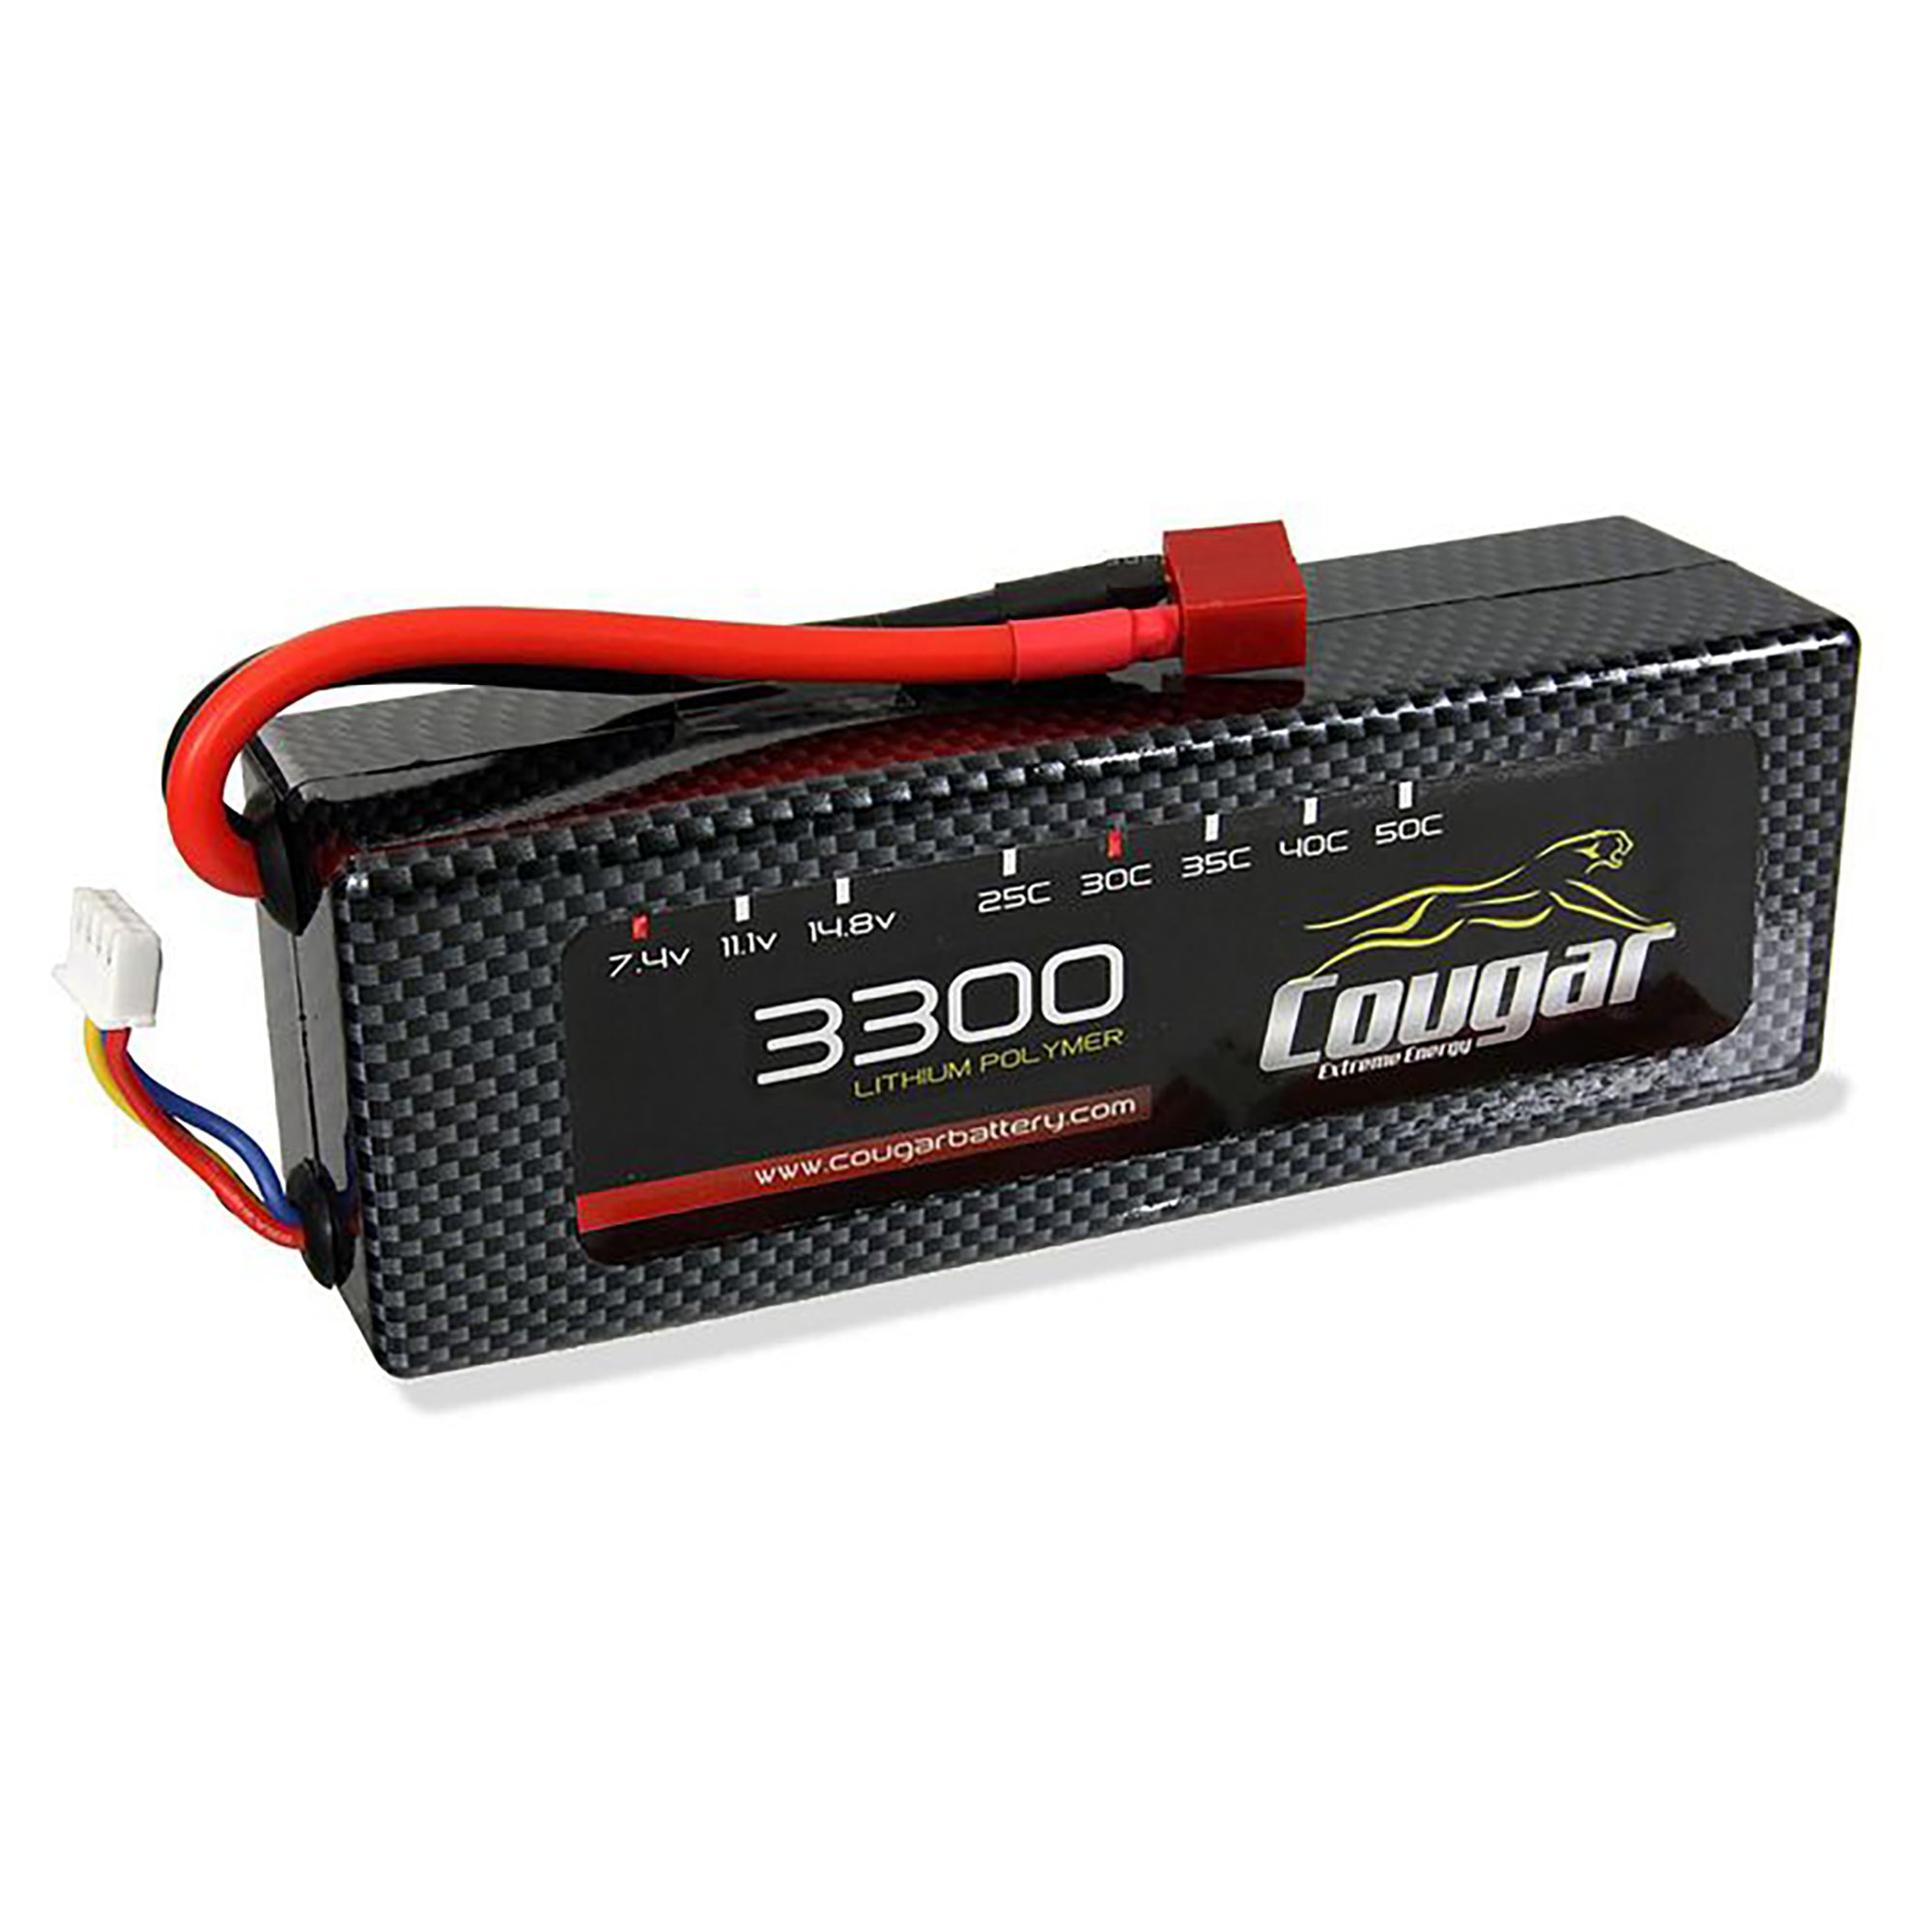 Cougar 3300mAh 7.4v 2S 30C Hard Case LiPo Battery